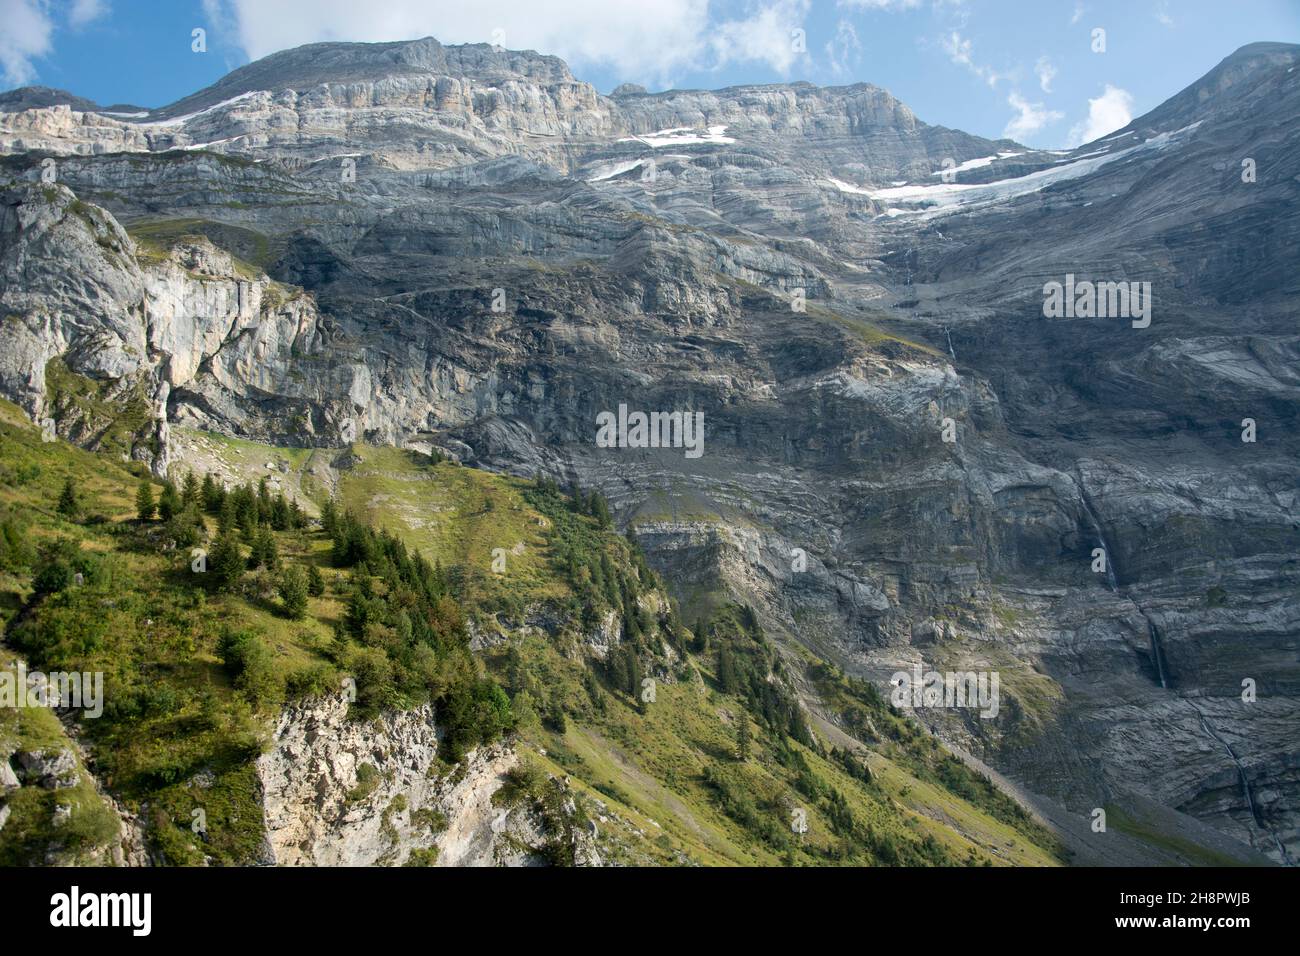 Blick in den Creux de Champ, ein imposanter Talkessel oberhalb von Les Diablerets in den Waadtländer Alpen, Schweiz Foto Stock